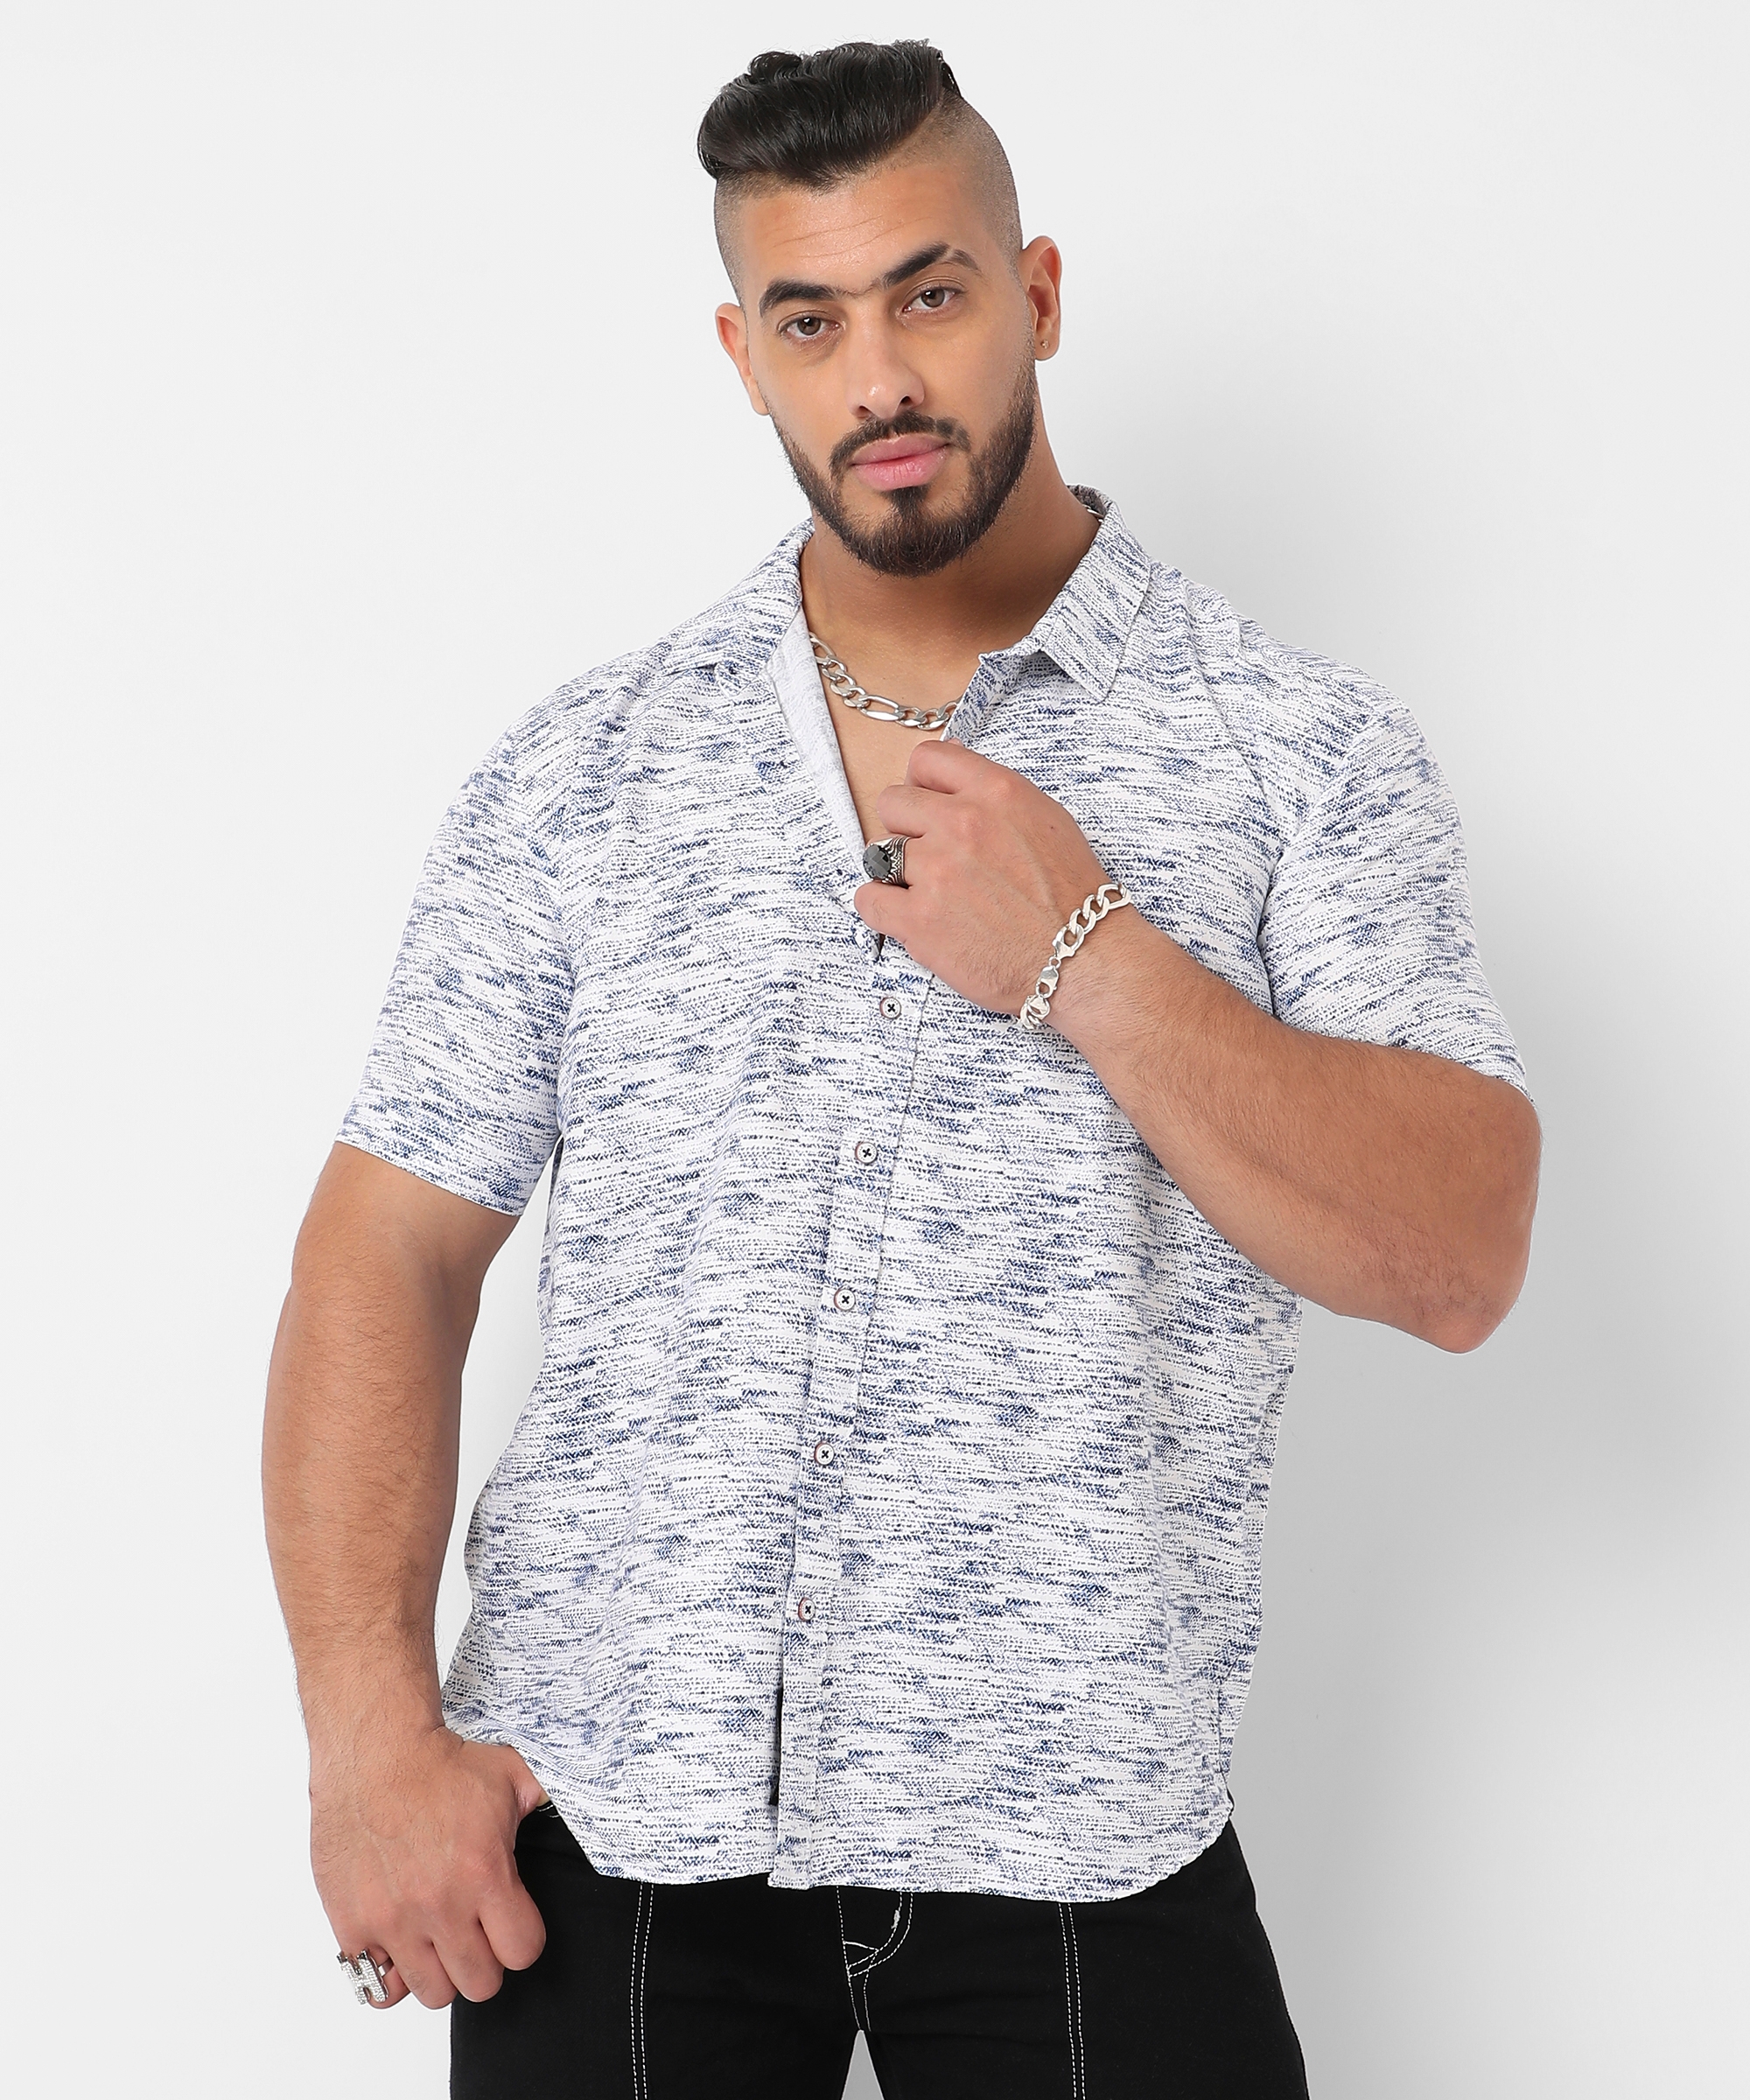 Instafab Plus | Men's Smoke White & Navy Blue Contrast Heathered Shirt